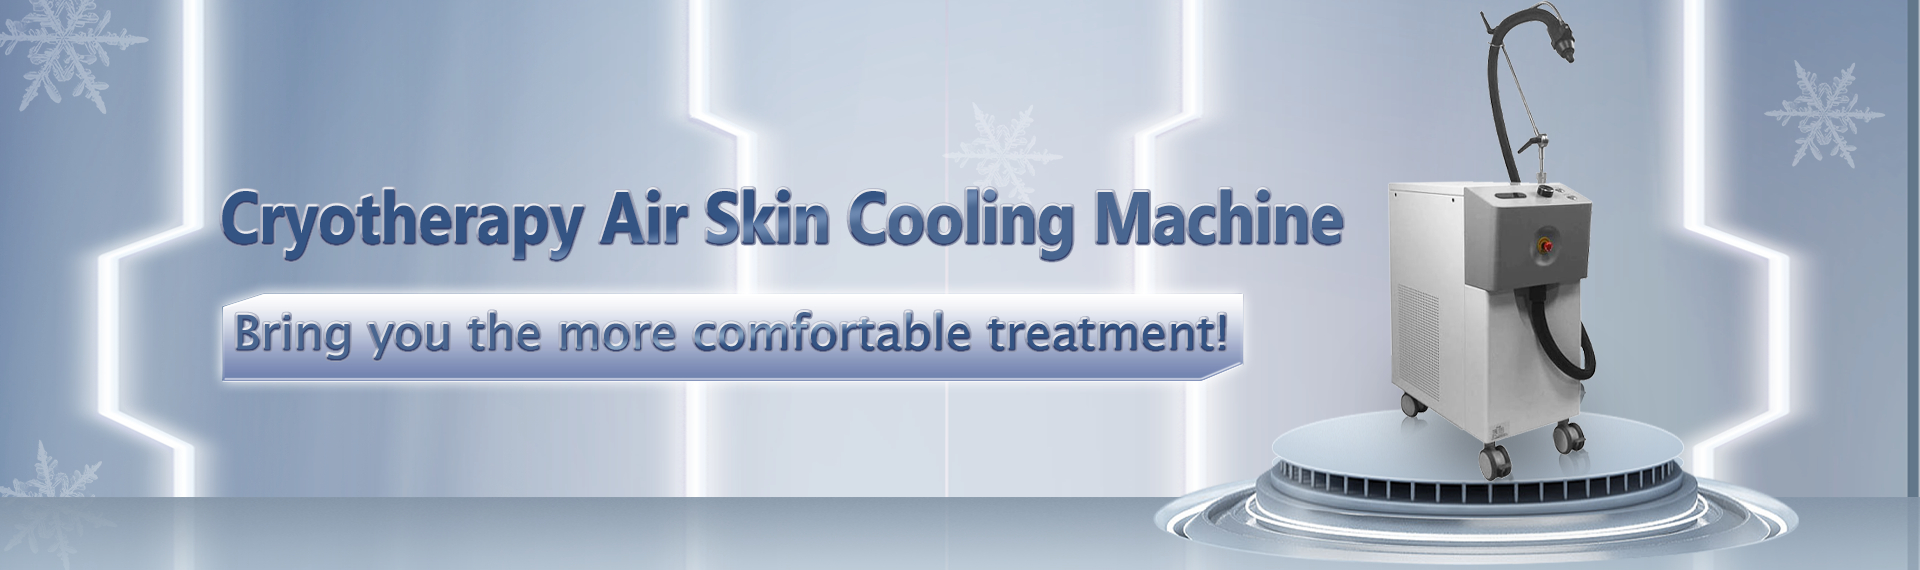 13-Air Skin Cooling Machine.